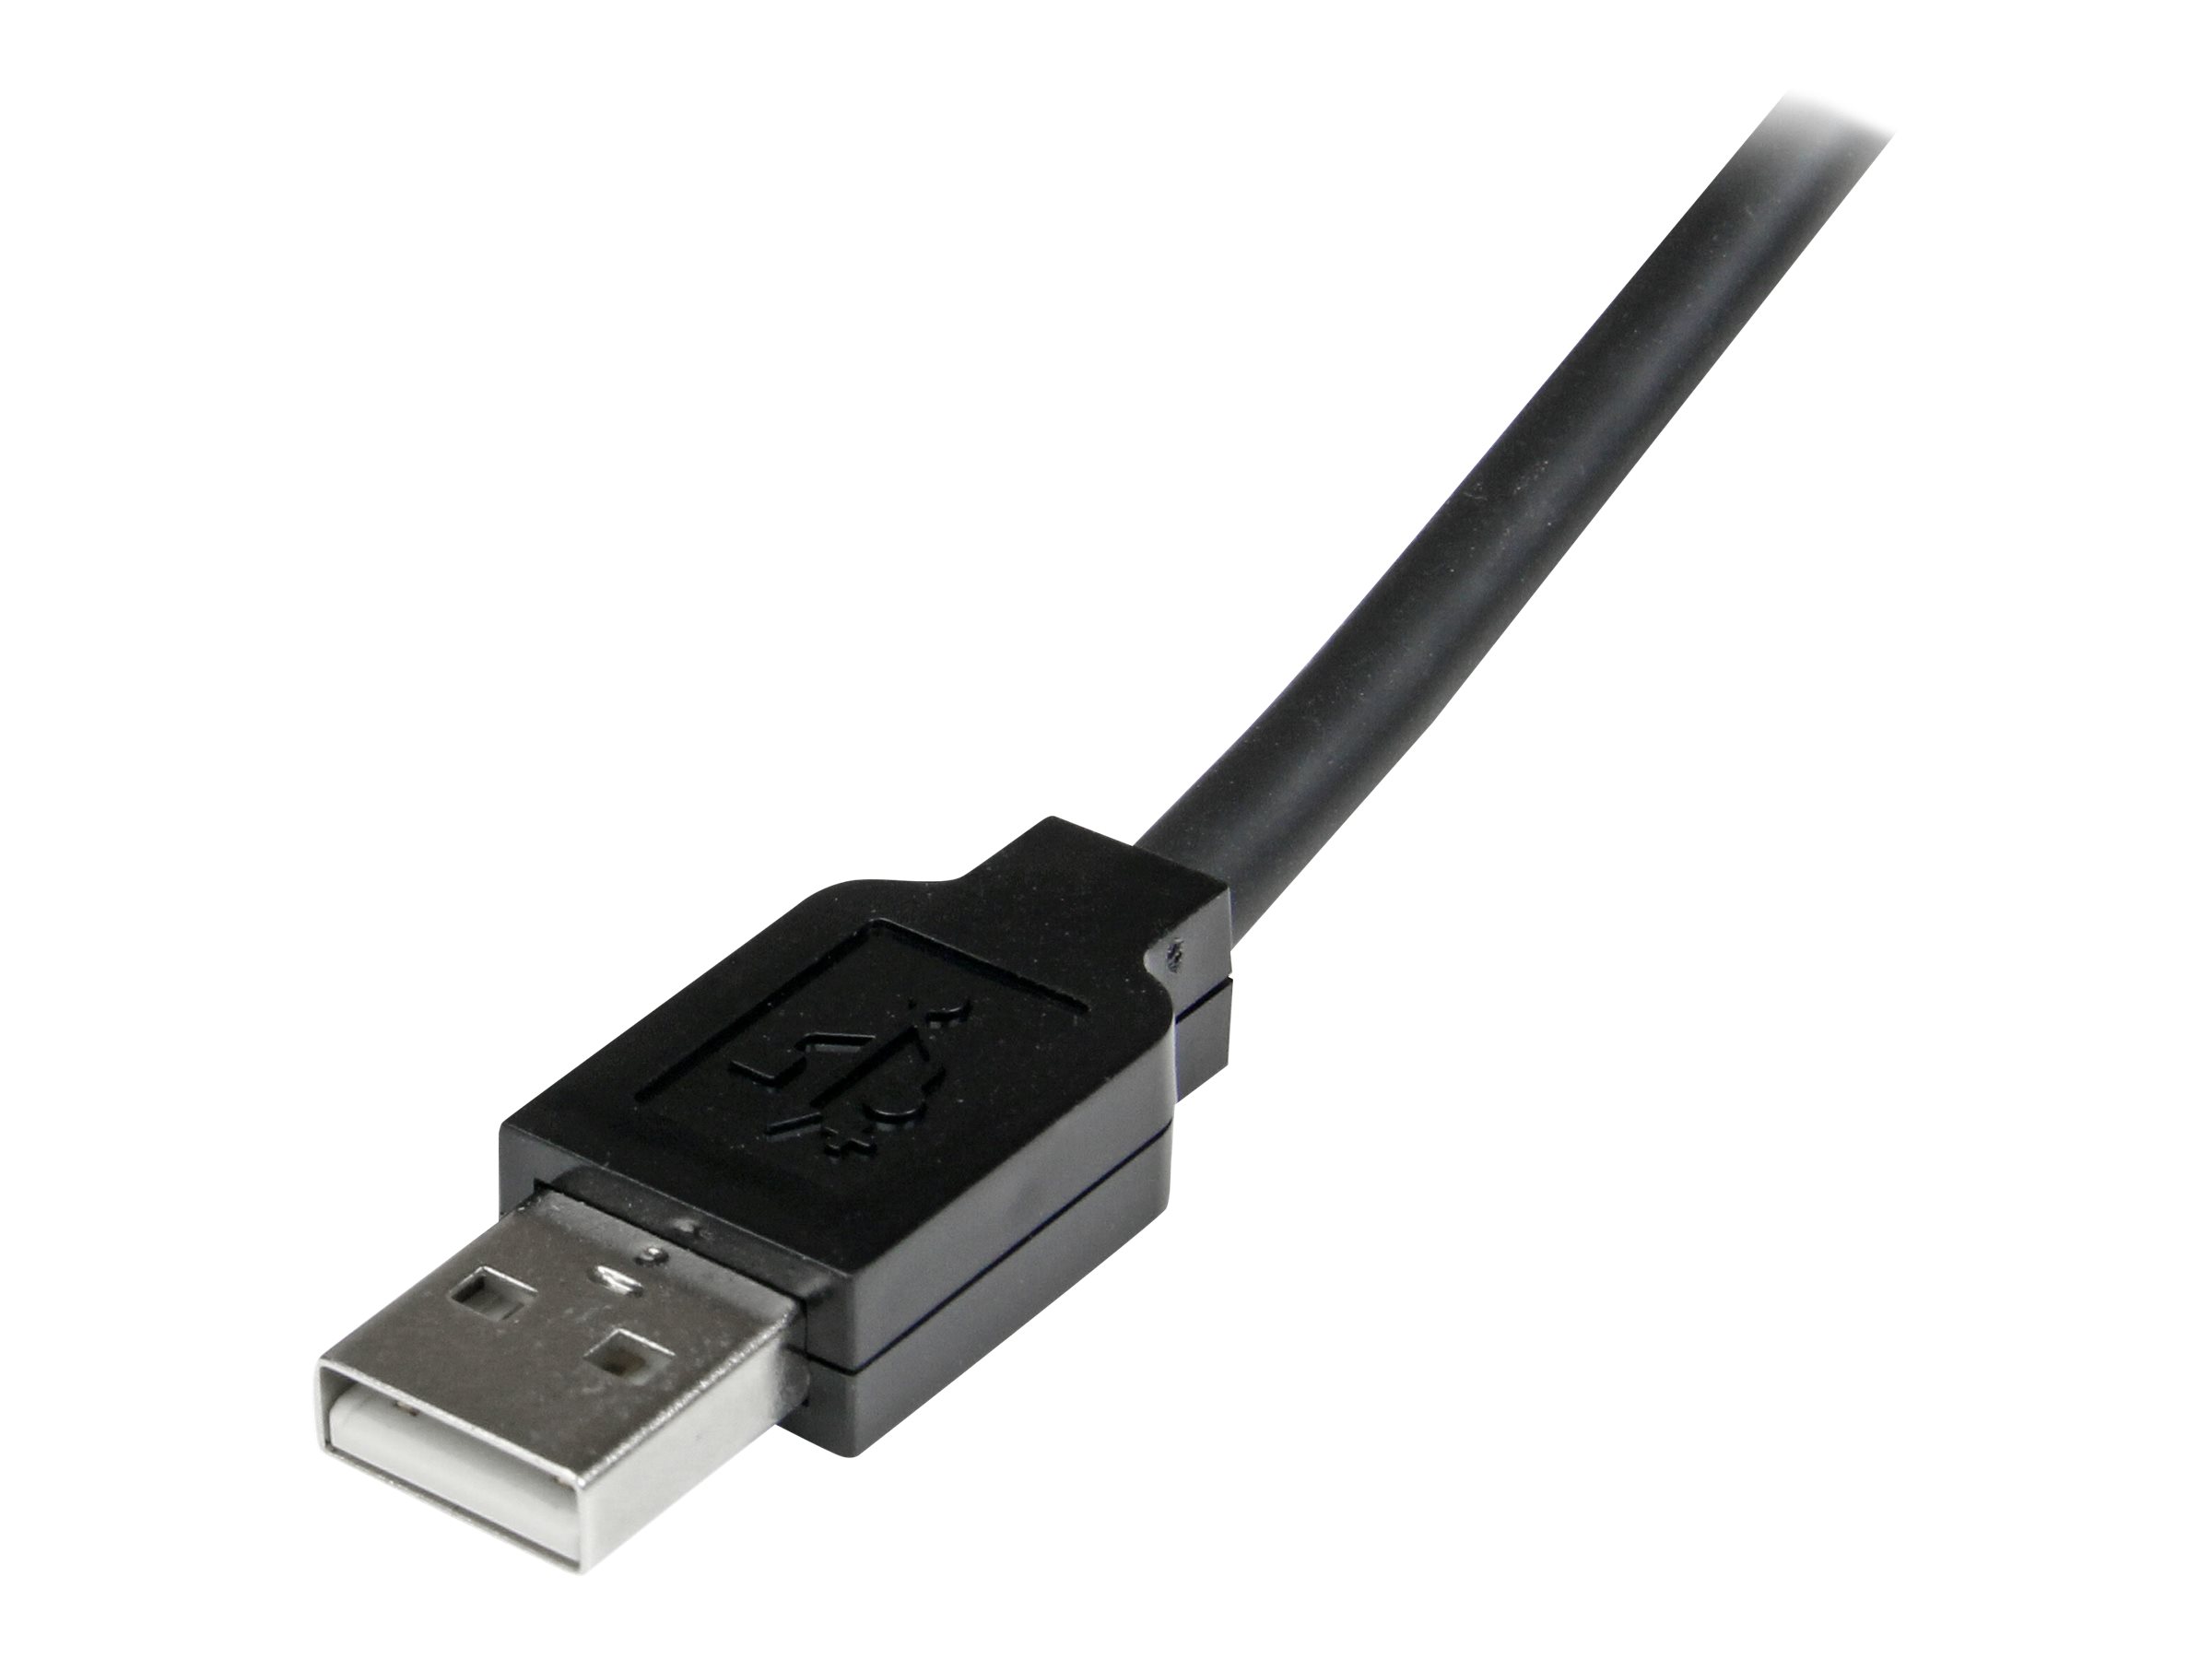 StarTech.com 15m USB 2.0 Repeater Kabel - Aktives USB Verlängerungskabel mit Signalverstärker - 1 x USB Stecker/ 1 x USB Buchse - USB-Verlängerungskabel - USB (W)